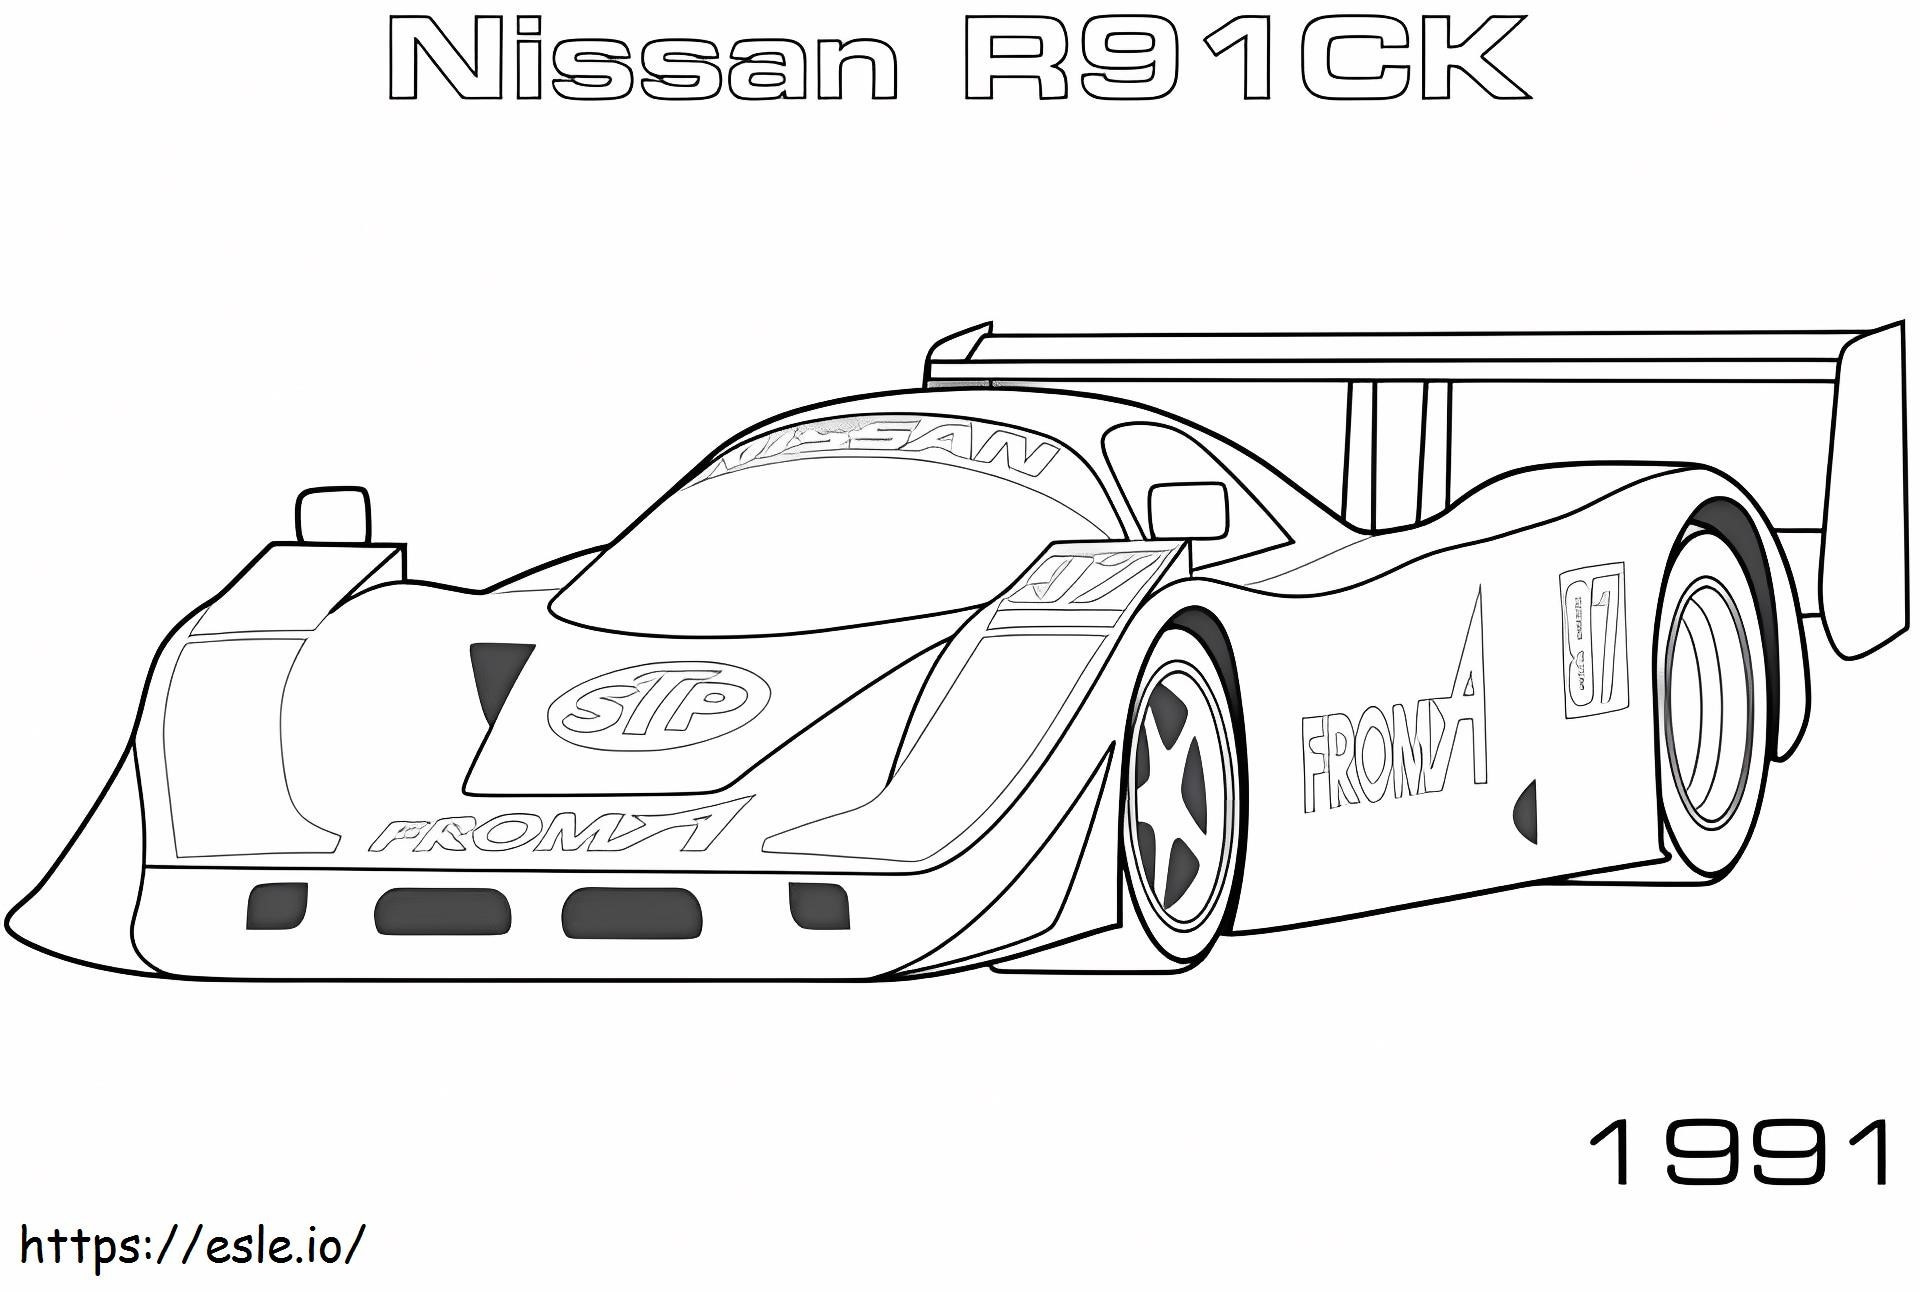 Nissan R91Ck boyama